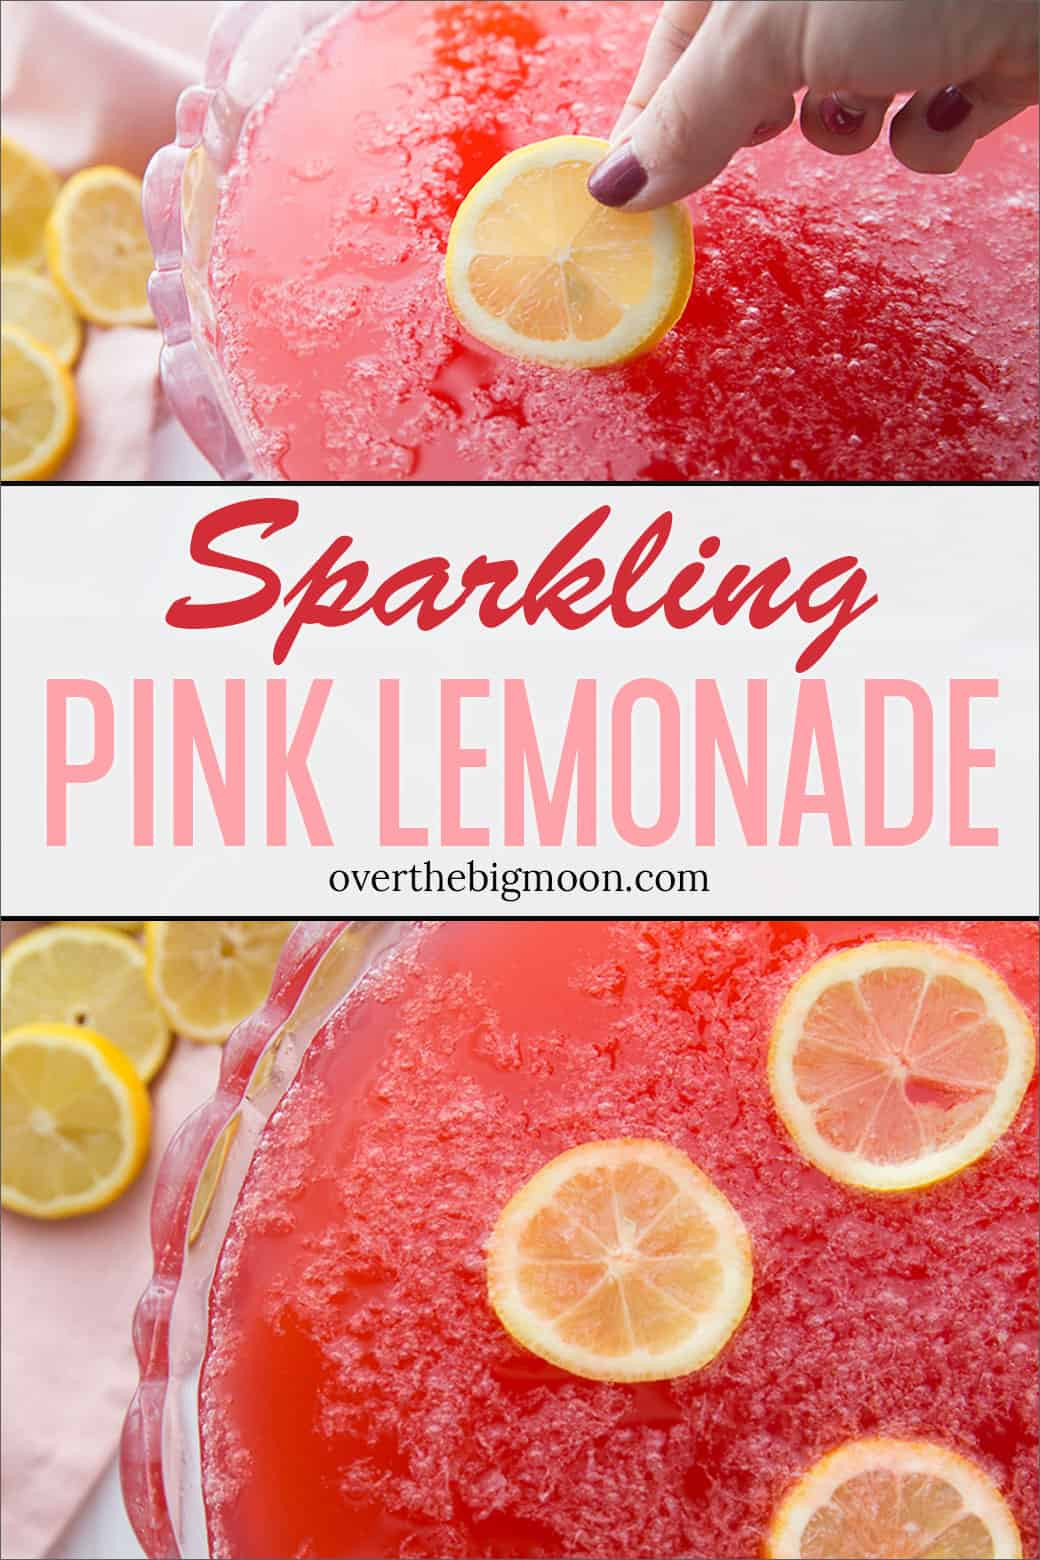 Pink Lemonade Punch Recipes For Baby Shower
 Pink Lemonade Sparkling Fruit Punch Over the Big Moon